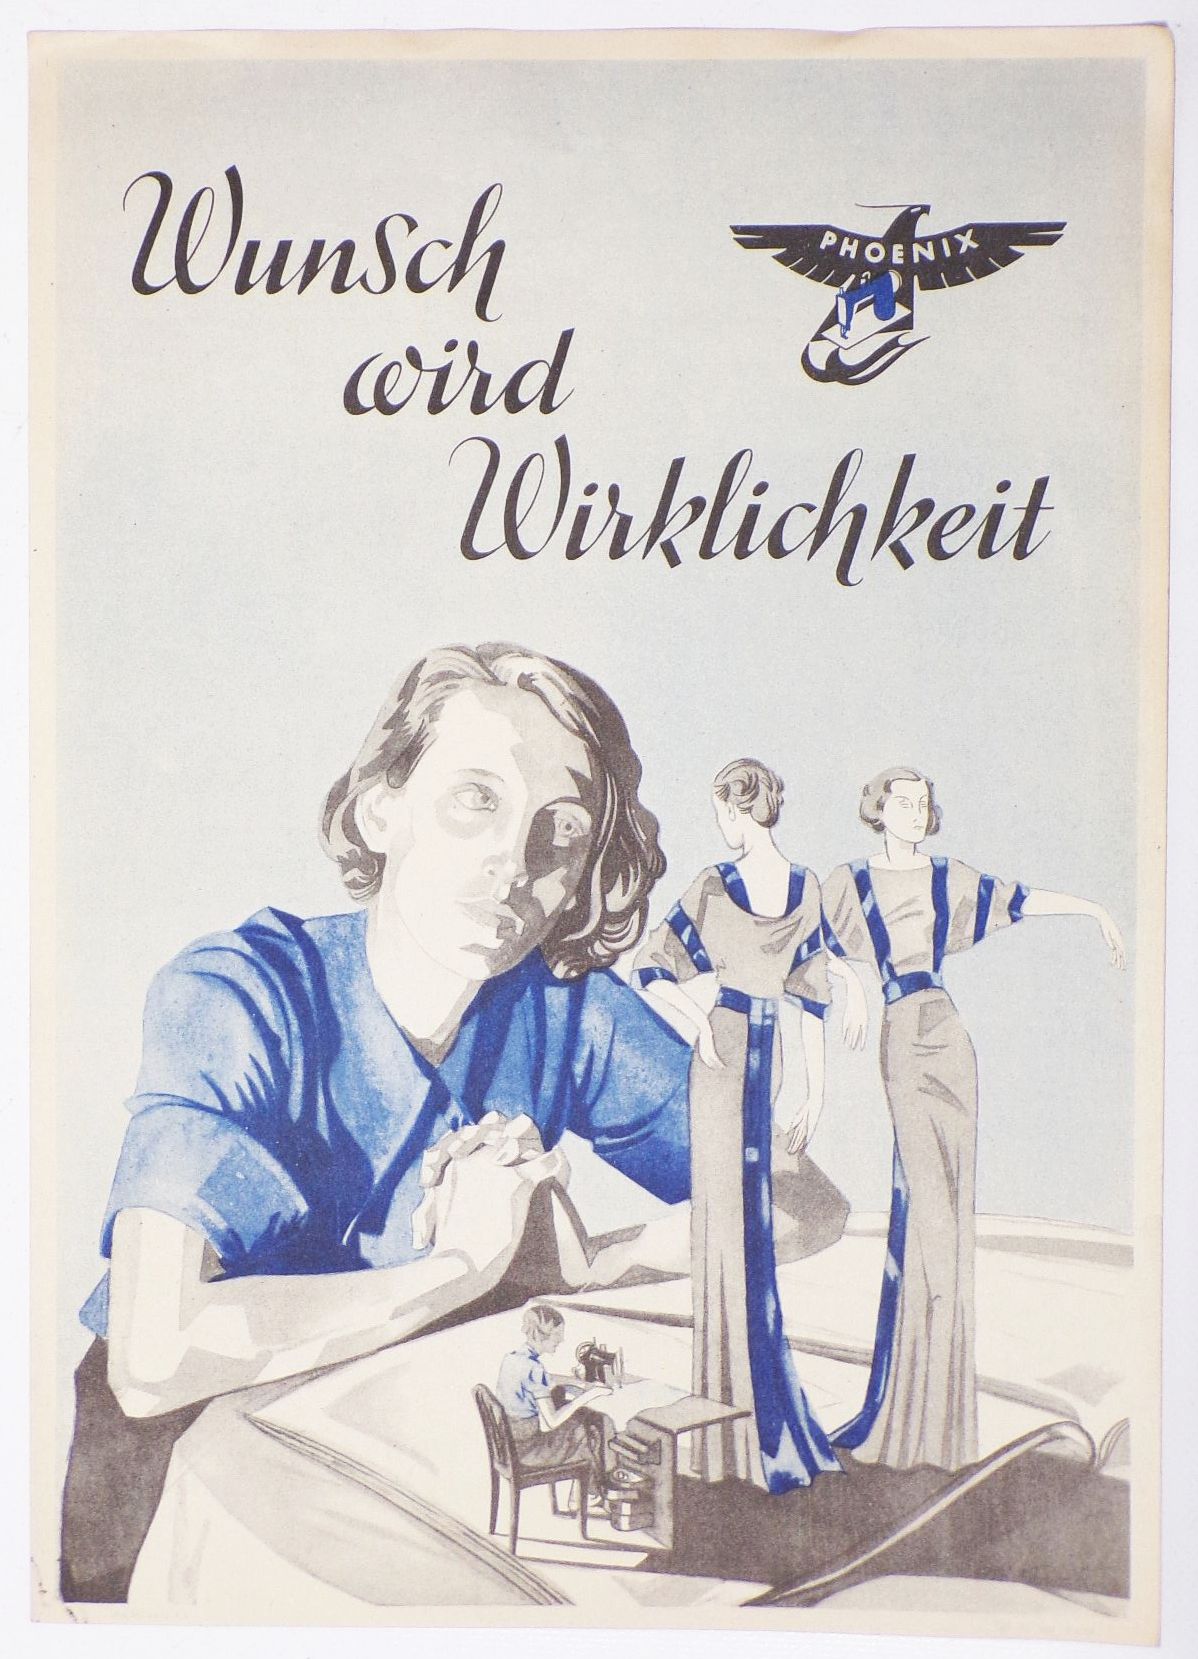 Phoenix Nähmaschine Werbeblatt Reklame Blatt Baer Rempel Bielefeld 1936